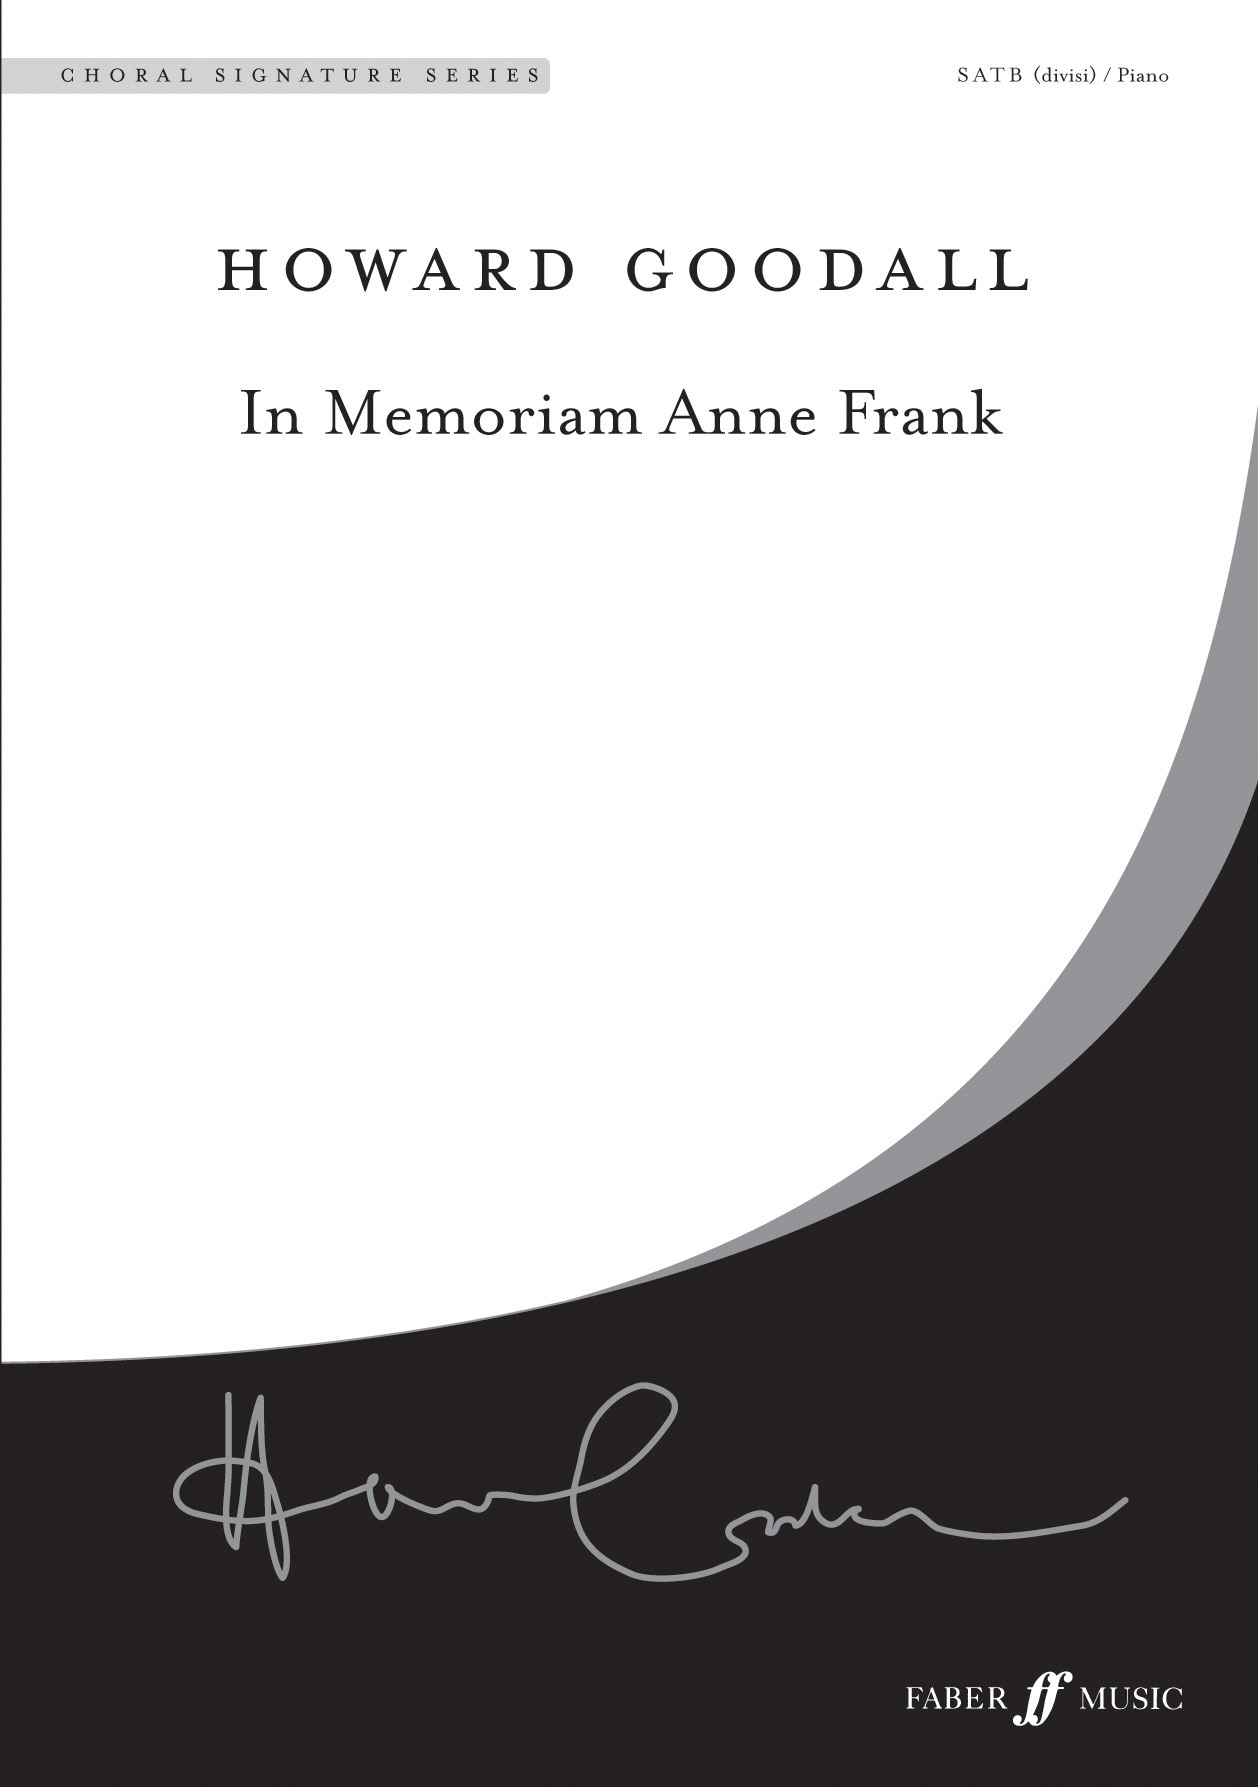 Howard Goodall: In Memoriam Anne Frank.: SATB: Vocal Score